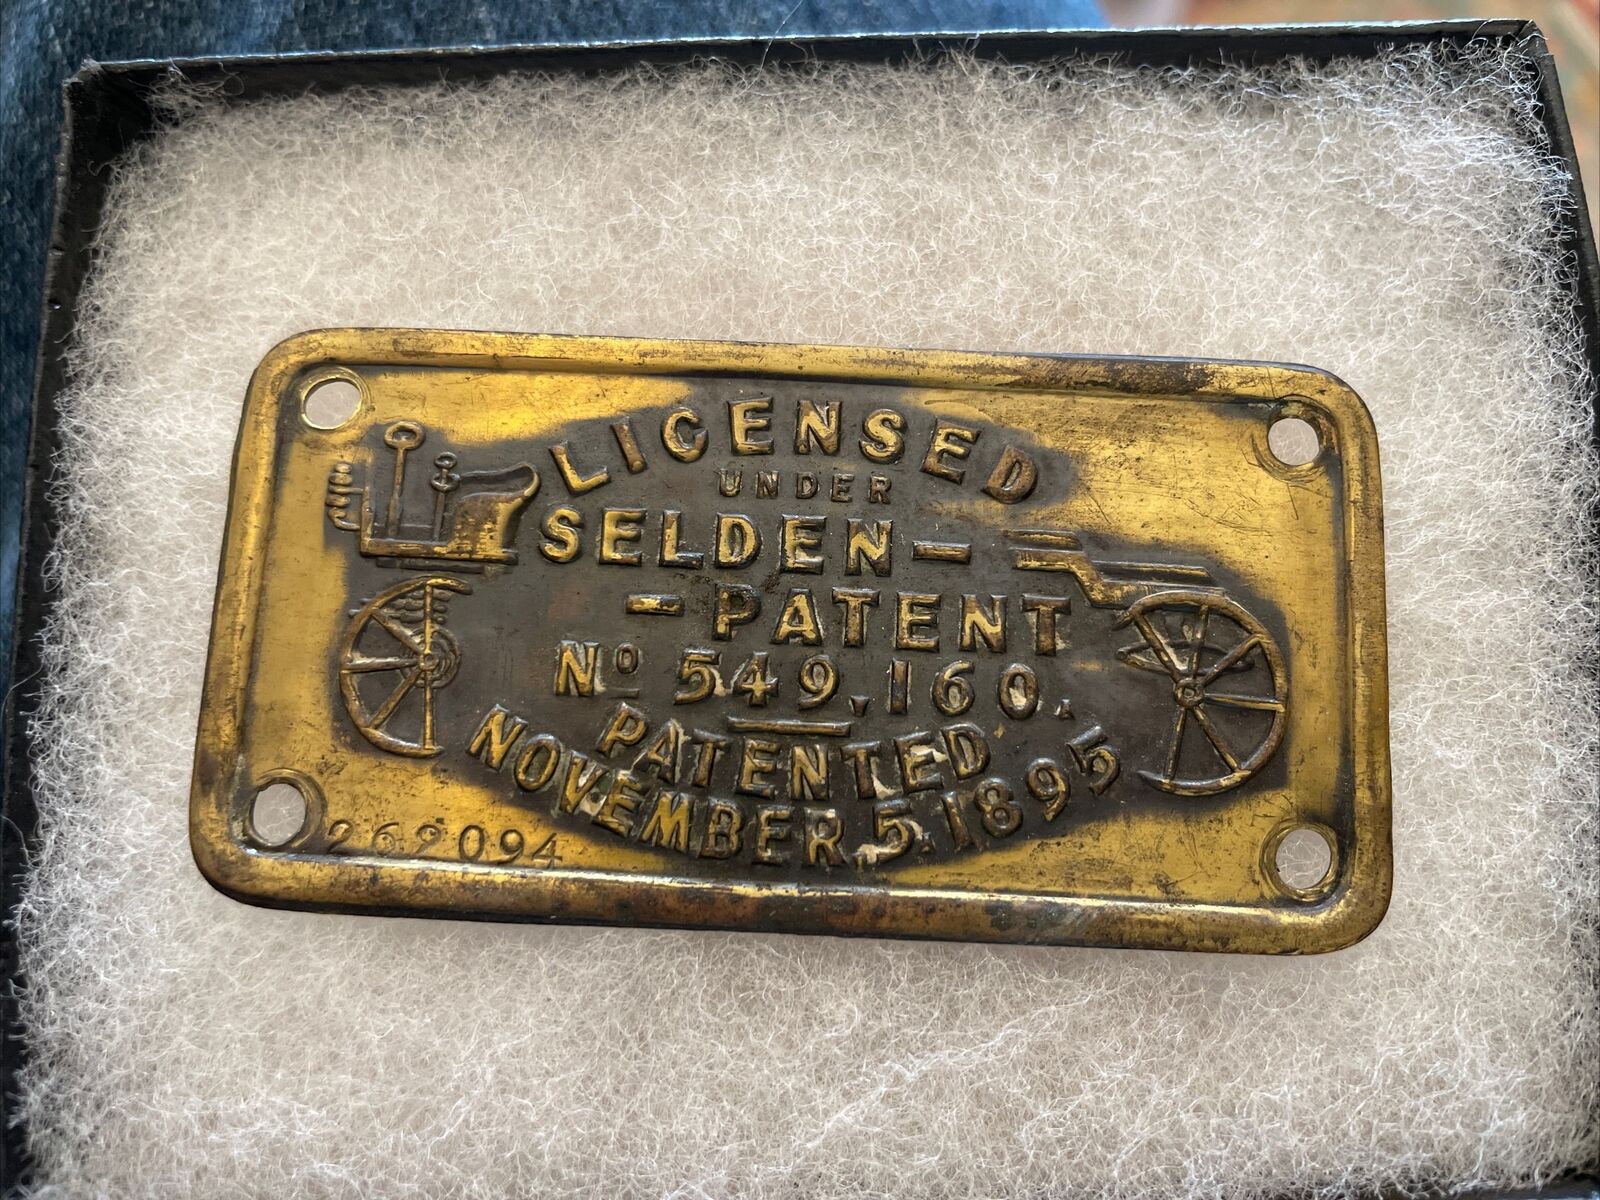 Licensed Under Selden Patent No 549 160 Patented November 5, 1895 Plaque Rare